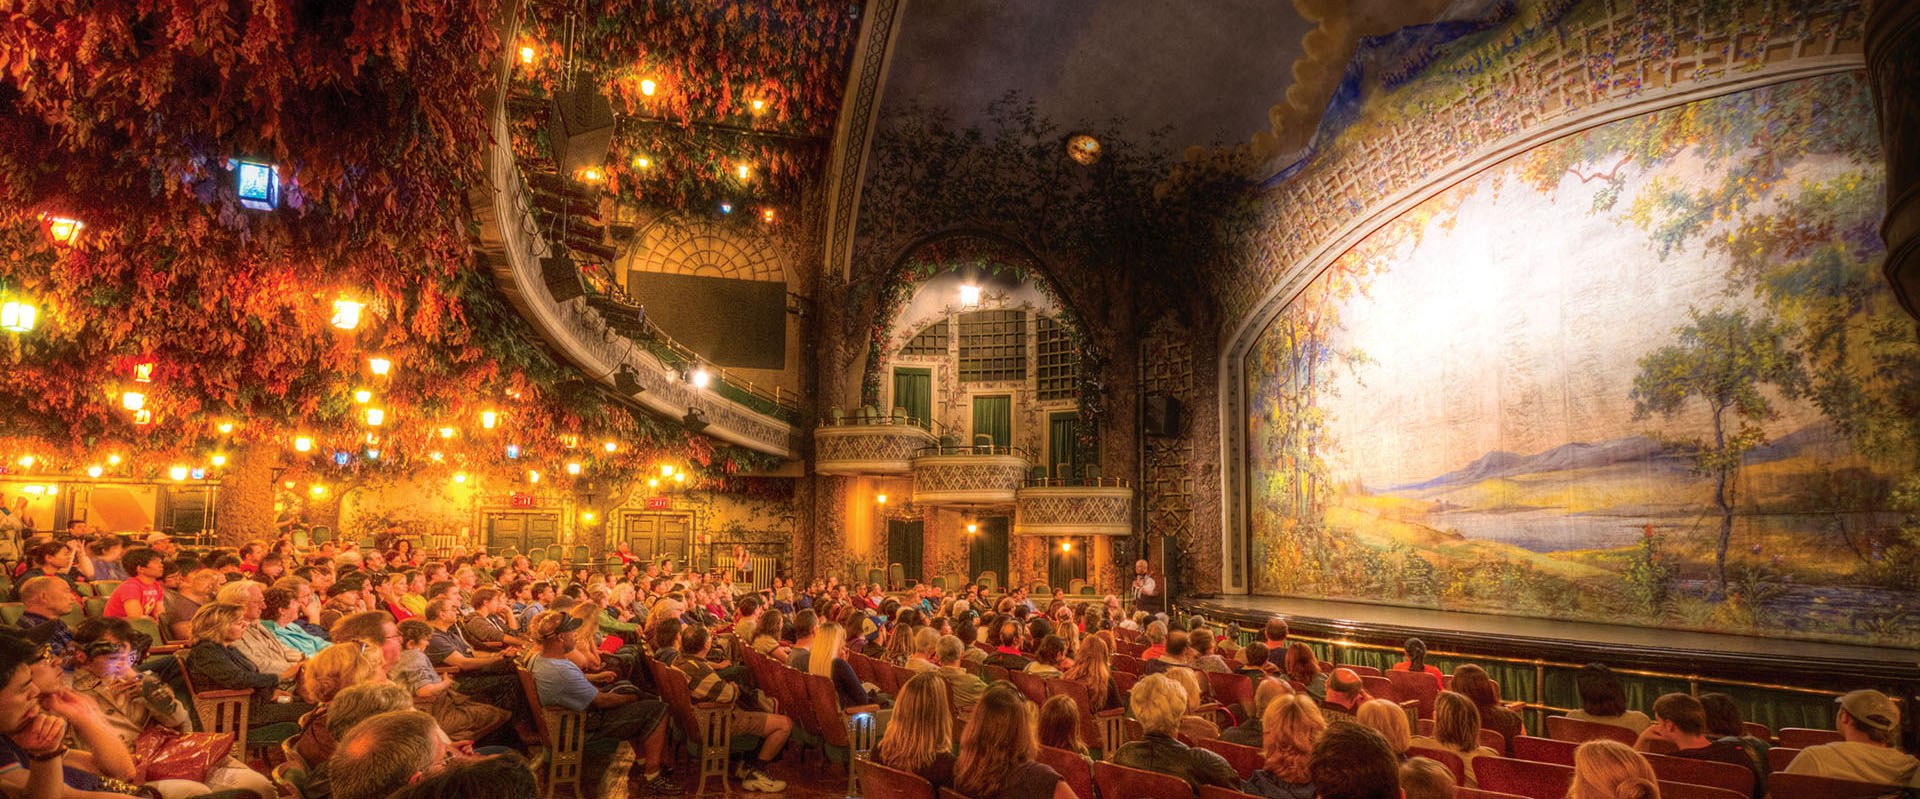 Inside the Winter Garden Theatre (Photo: Josh McSweeney)